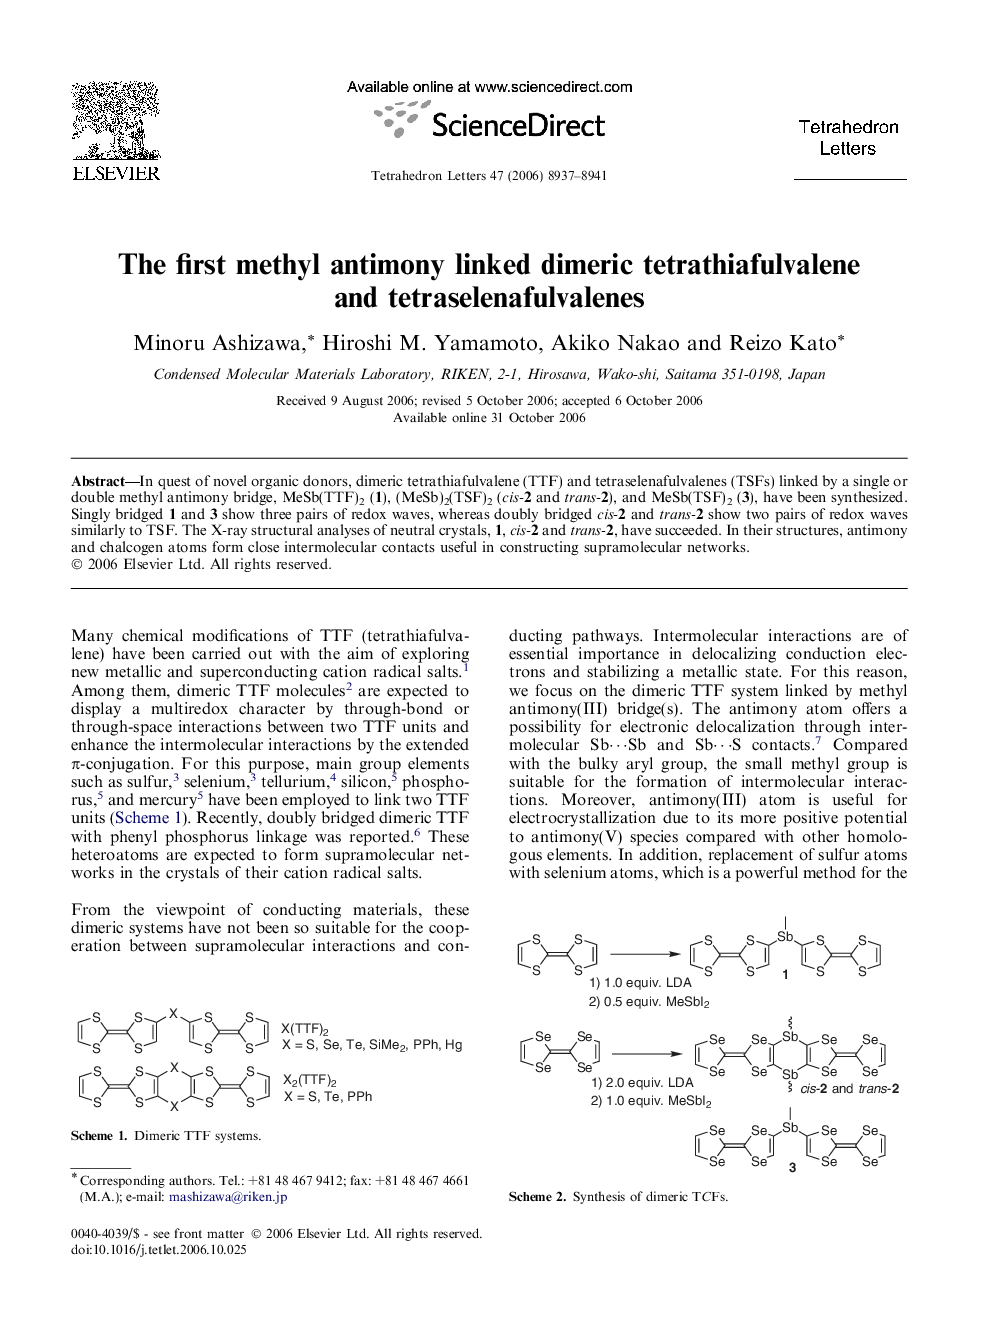 The first methyl antimony linked dimeric tetrathiafulvalene and tetraselenafulvalenes